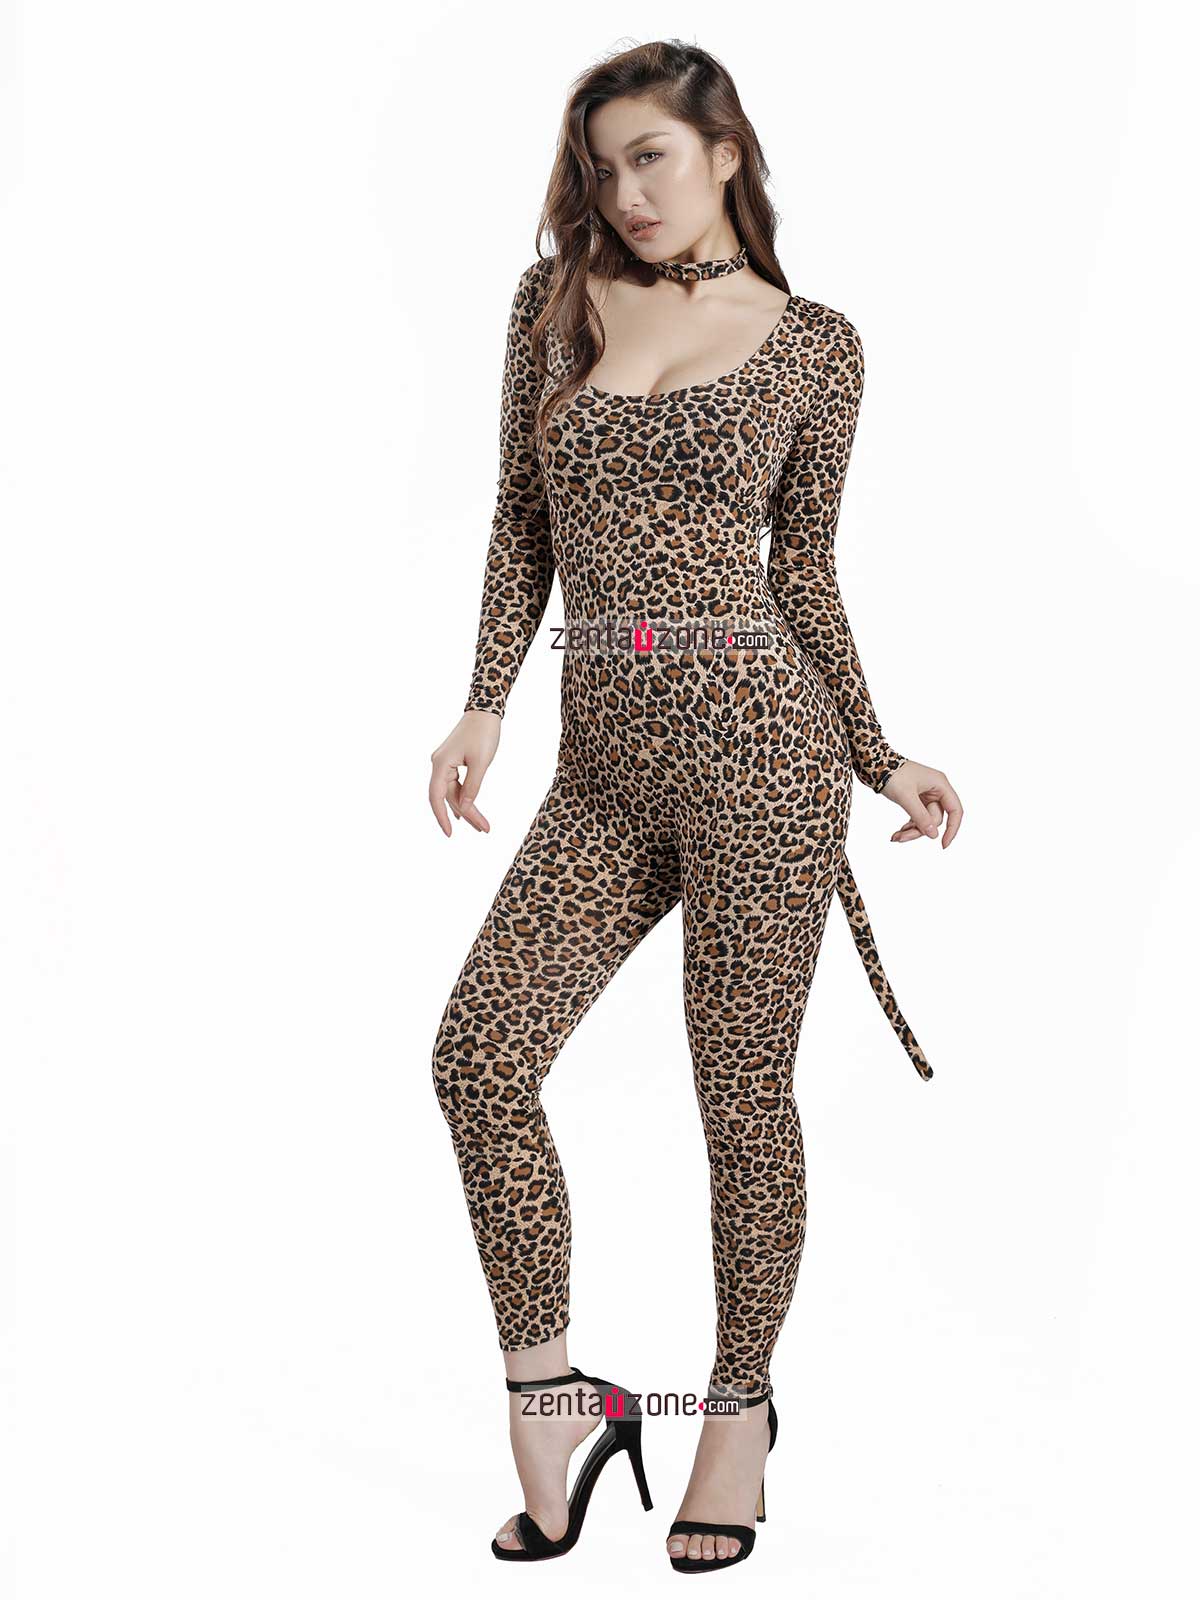 Cute Leopard Spandex Catsuit